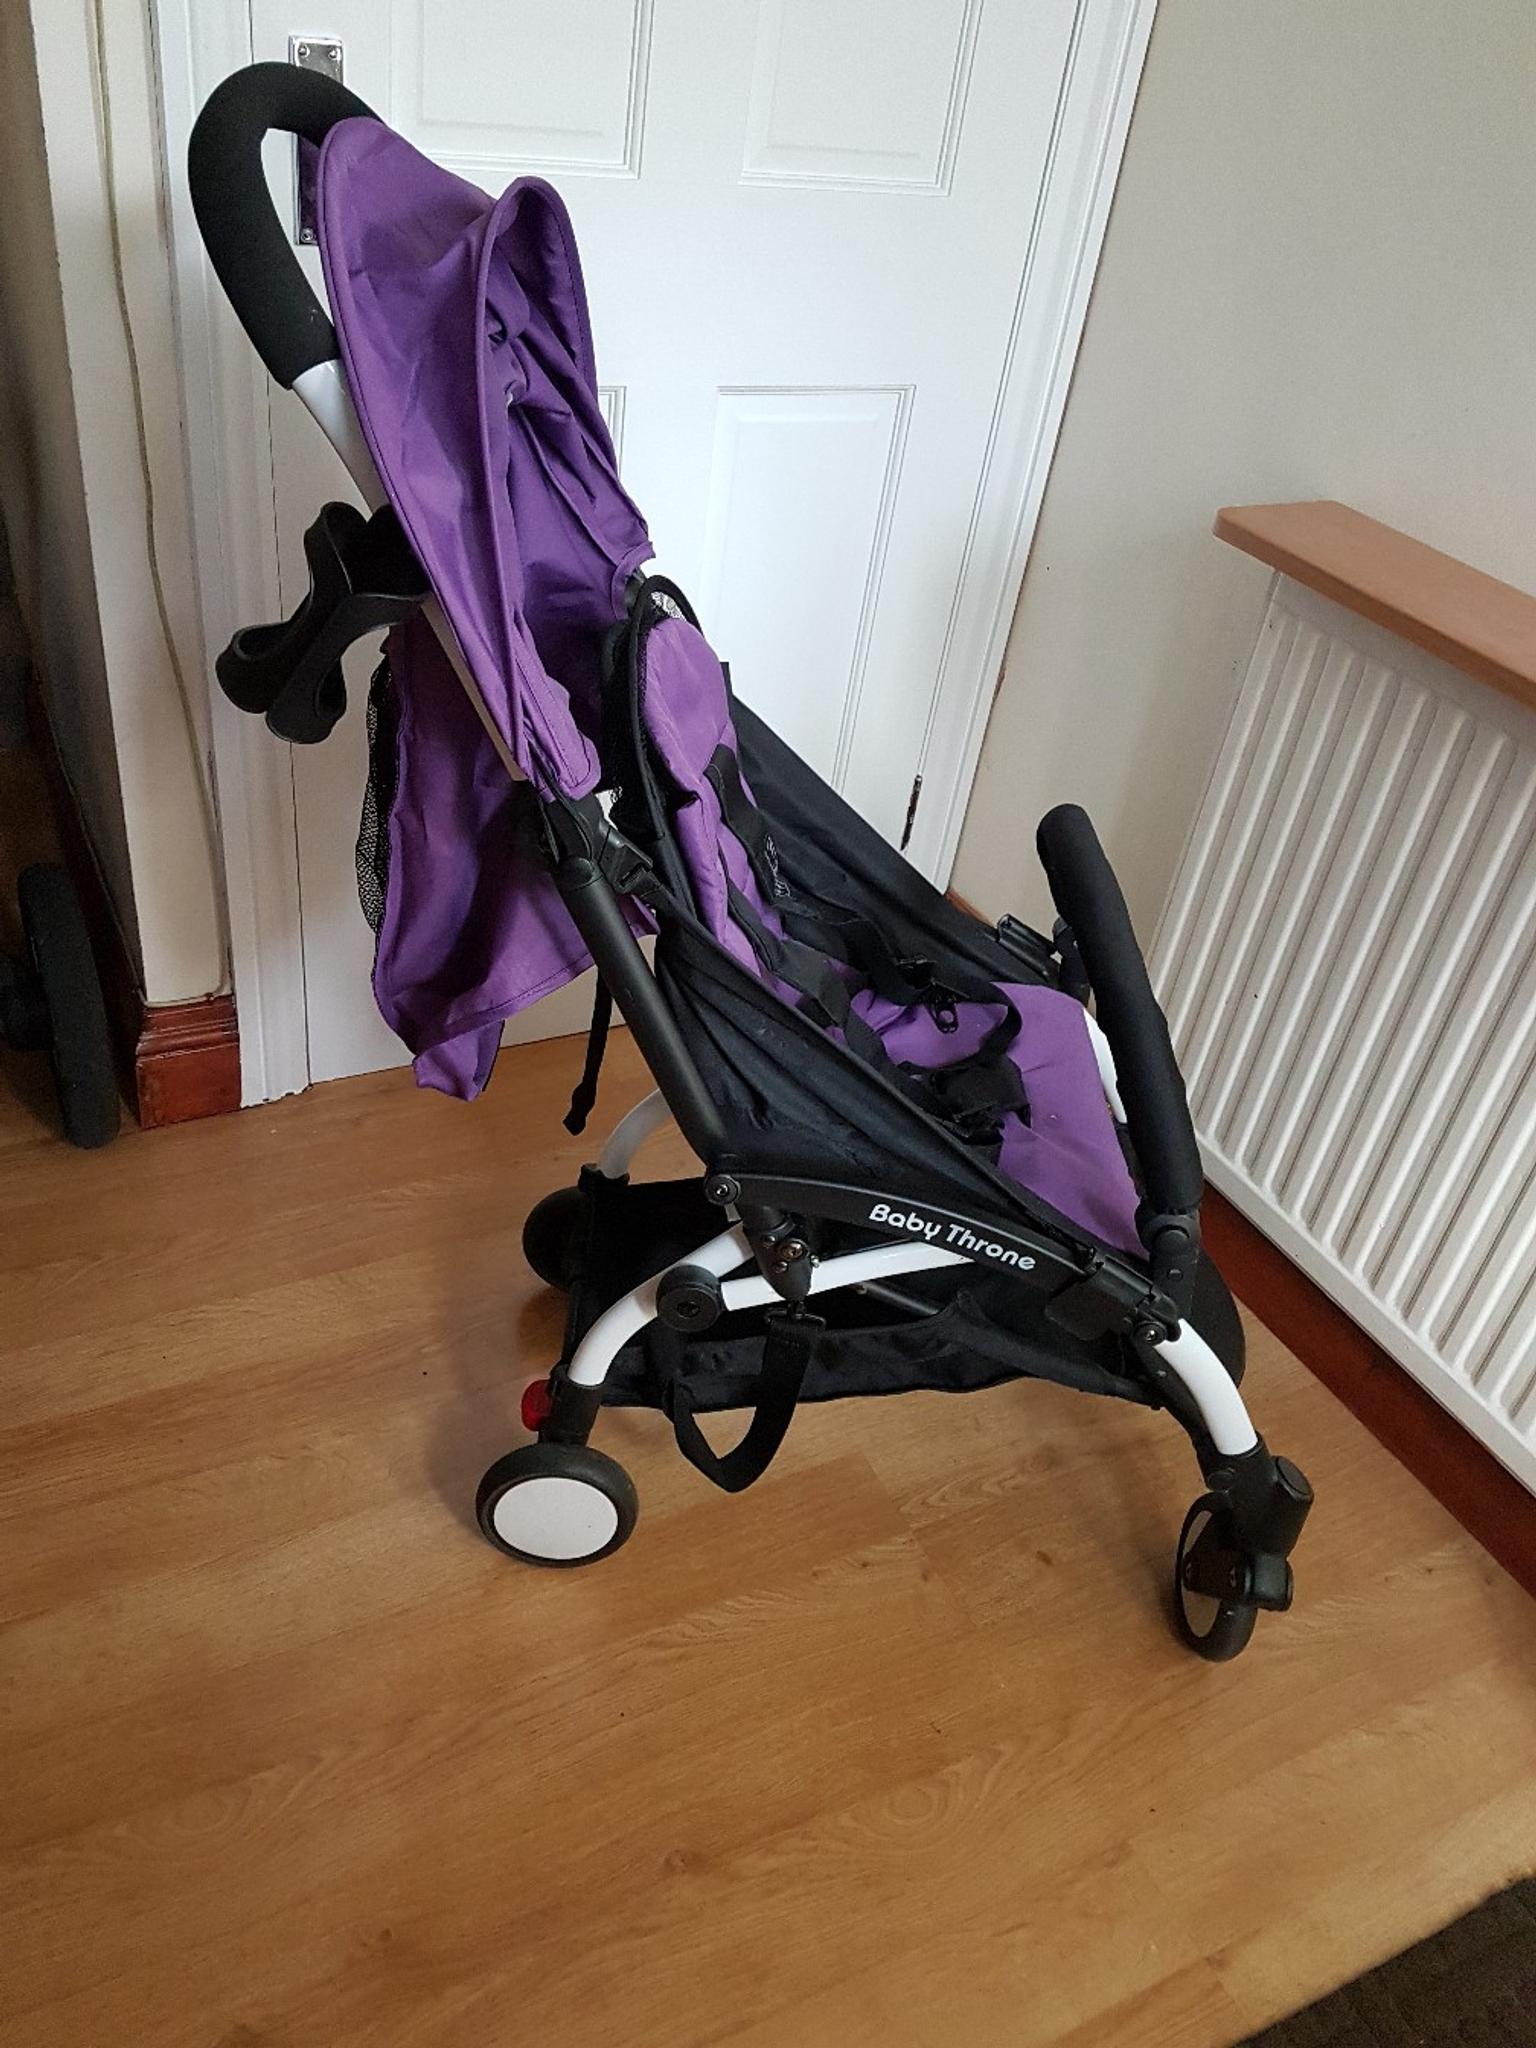 baby throne stroller uk